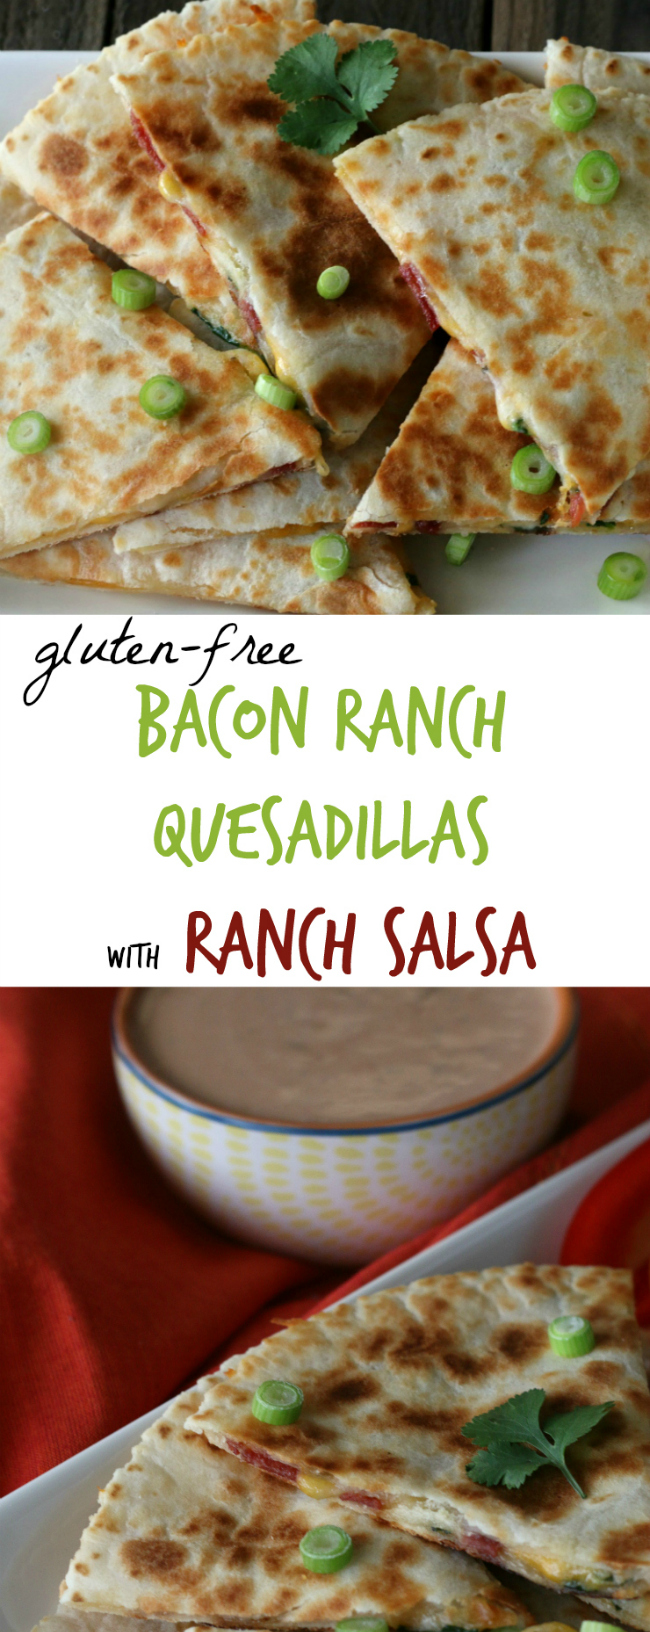 Gluten-free Bacon Ranch Quesadillas with Ranch Salsa. Easy weeknight dinner recipe!